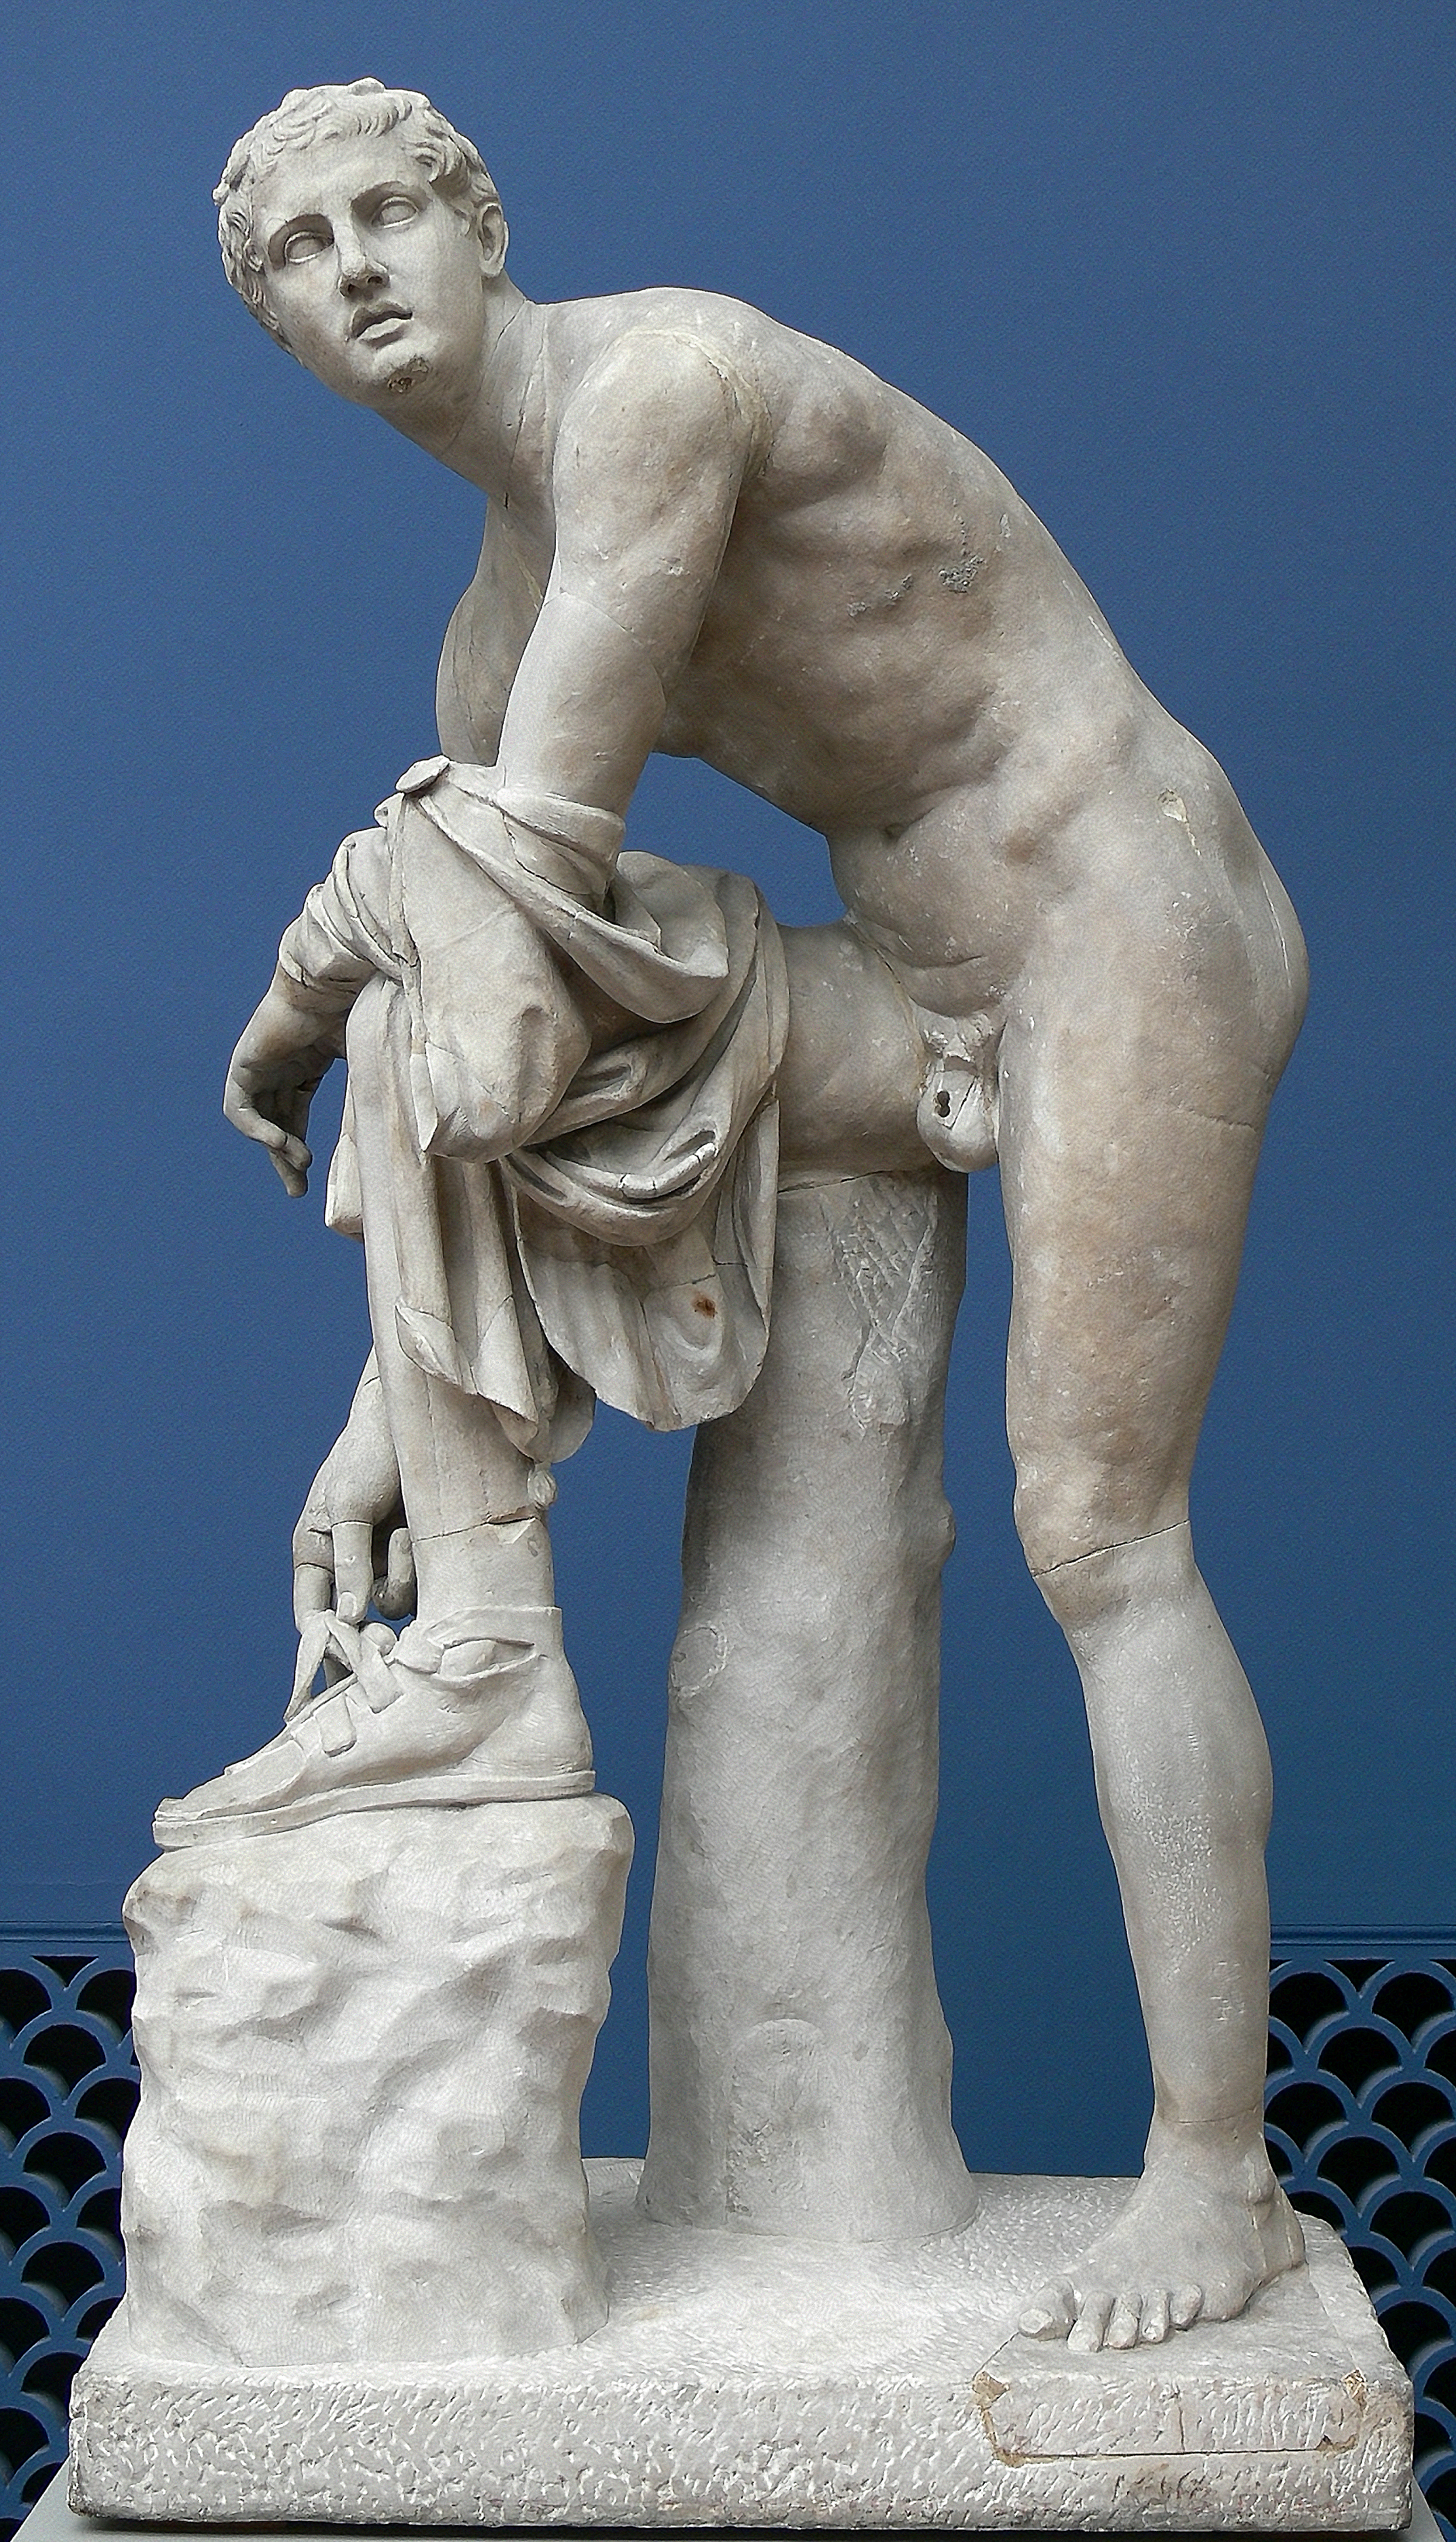 Ny Carlsberg Glyptothek - Hermes, Jason the Sandlebinder, by the sculptor B. Cavaceppi restoration